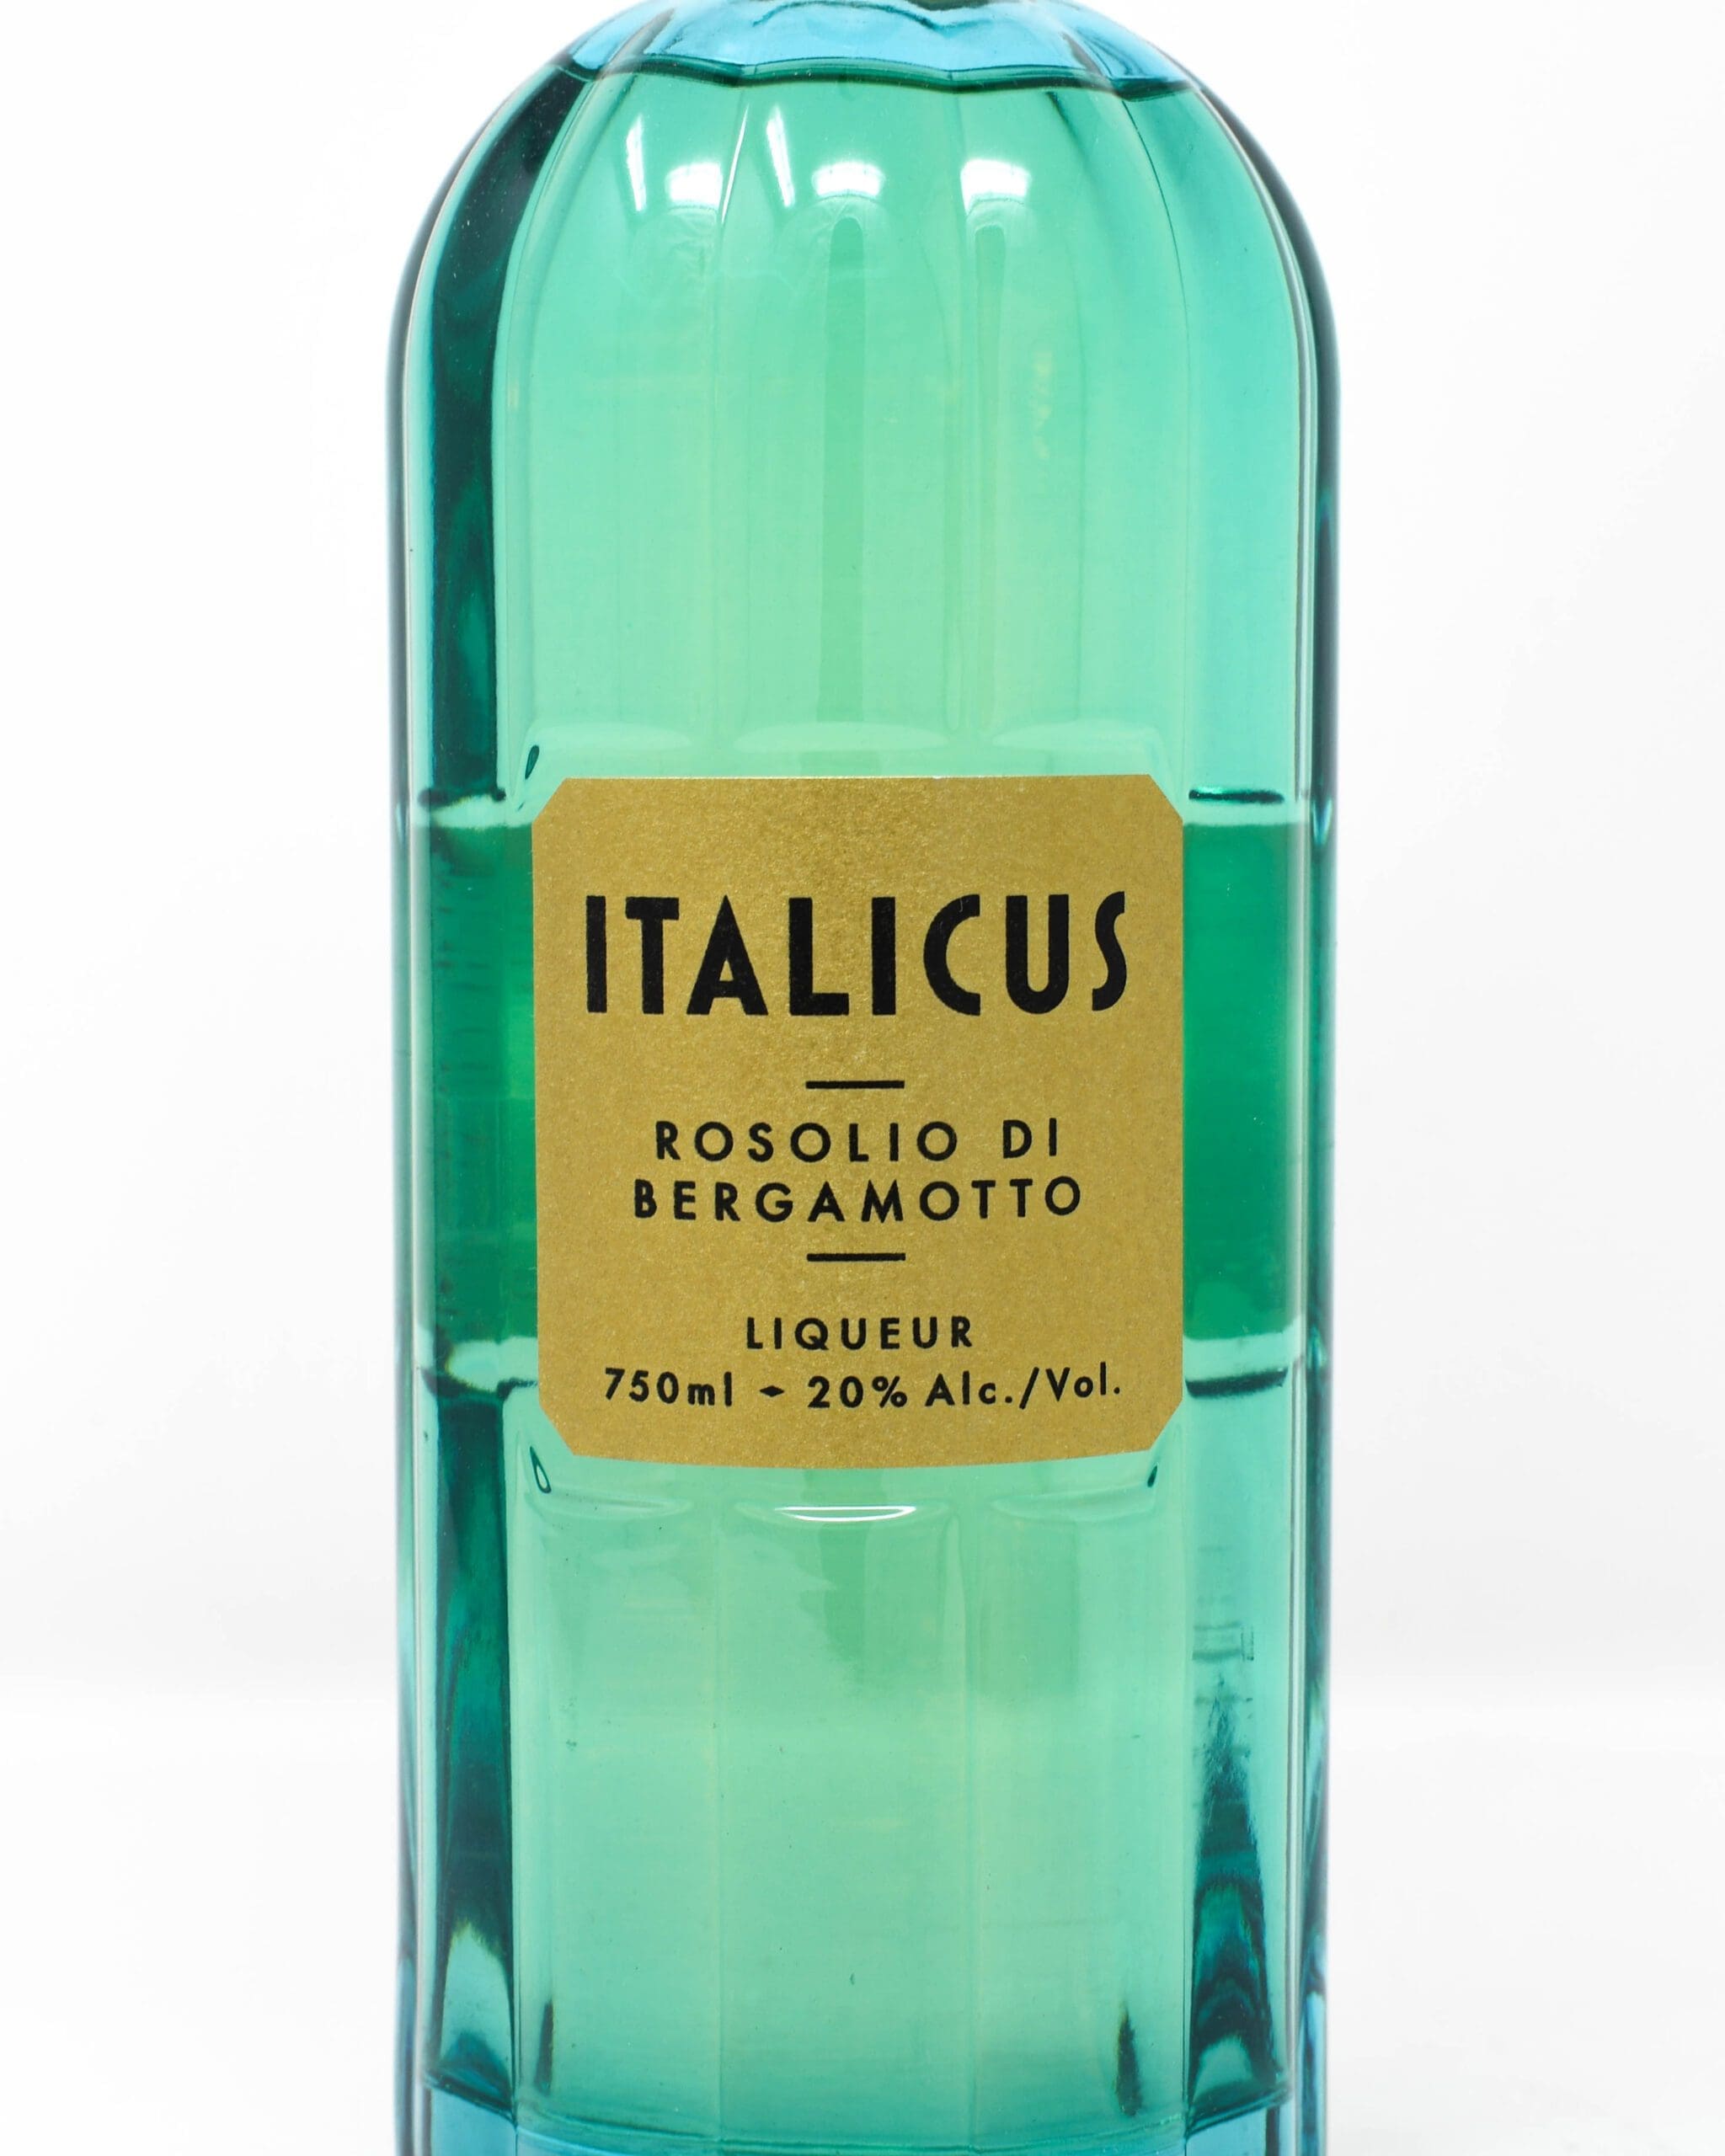 Italicus, Rosolio di 750ml Liqueur, Princeville Wine Bergamotto, - Market